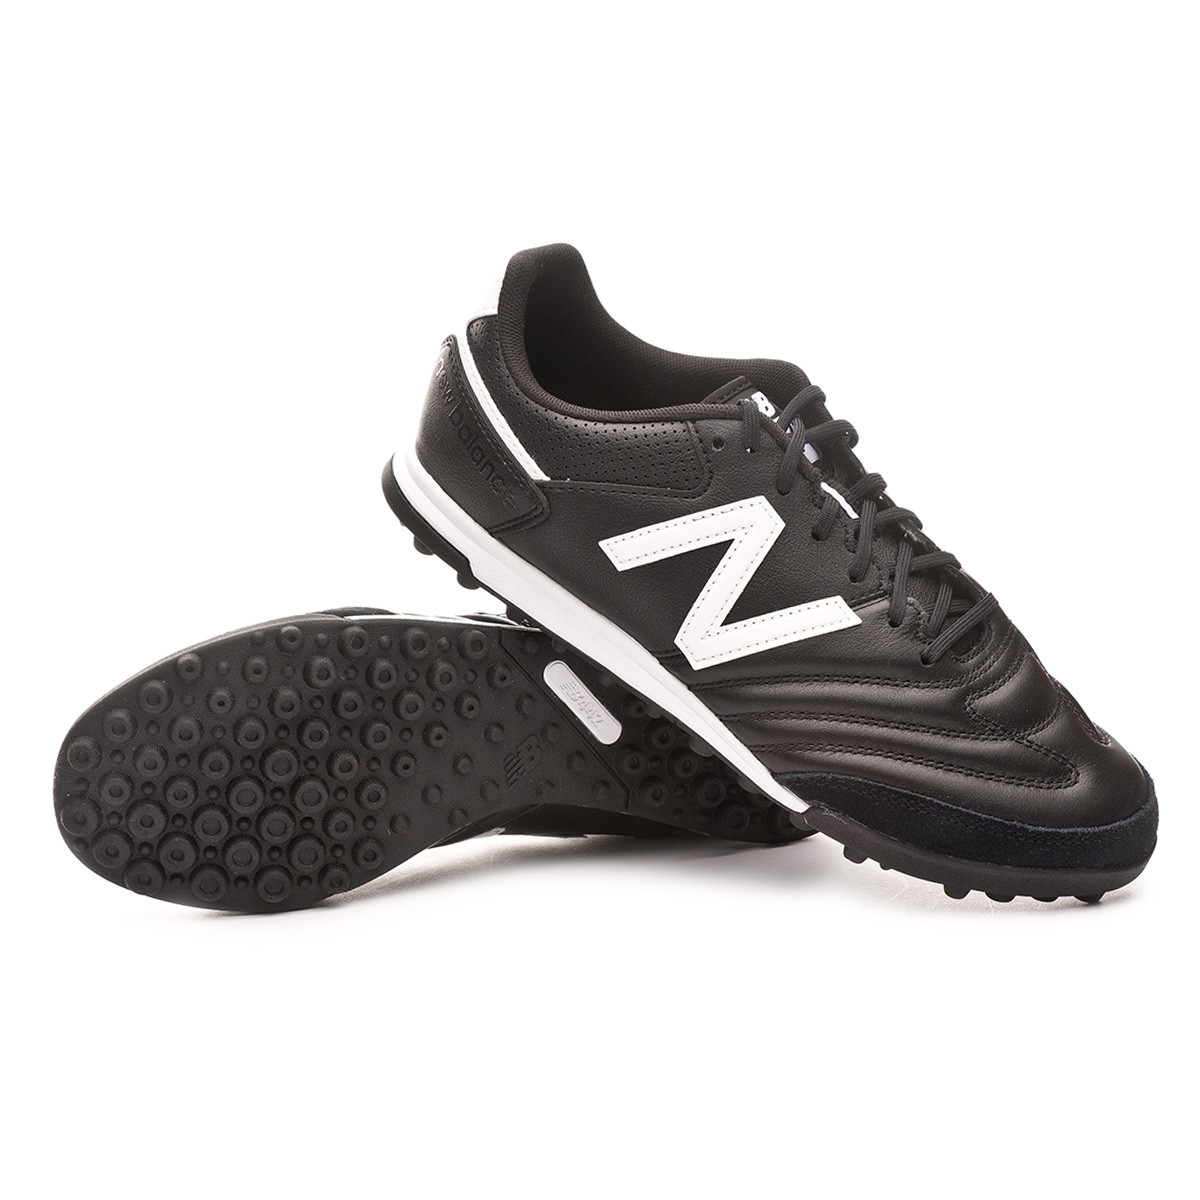 buy new balance football boots